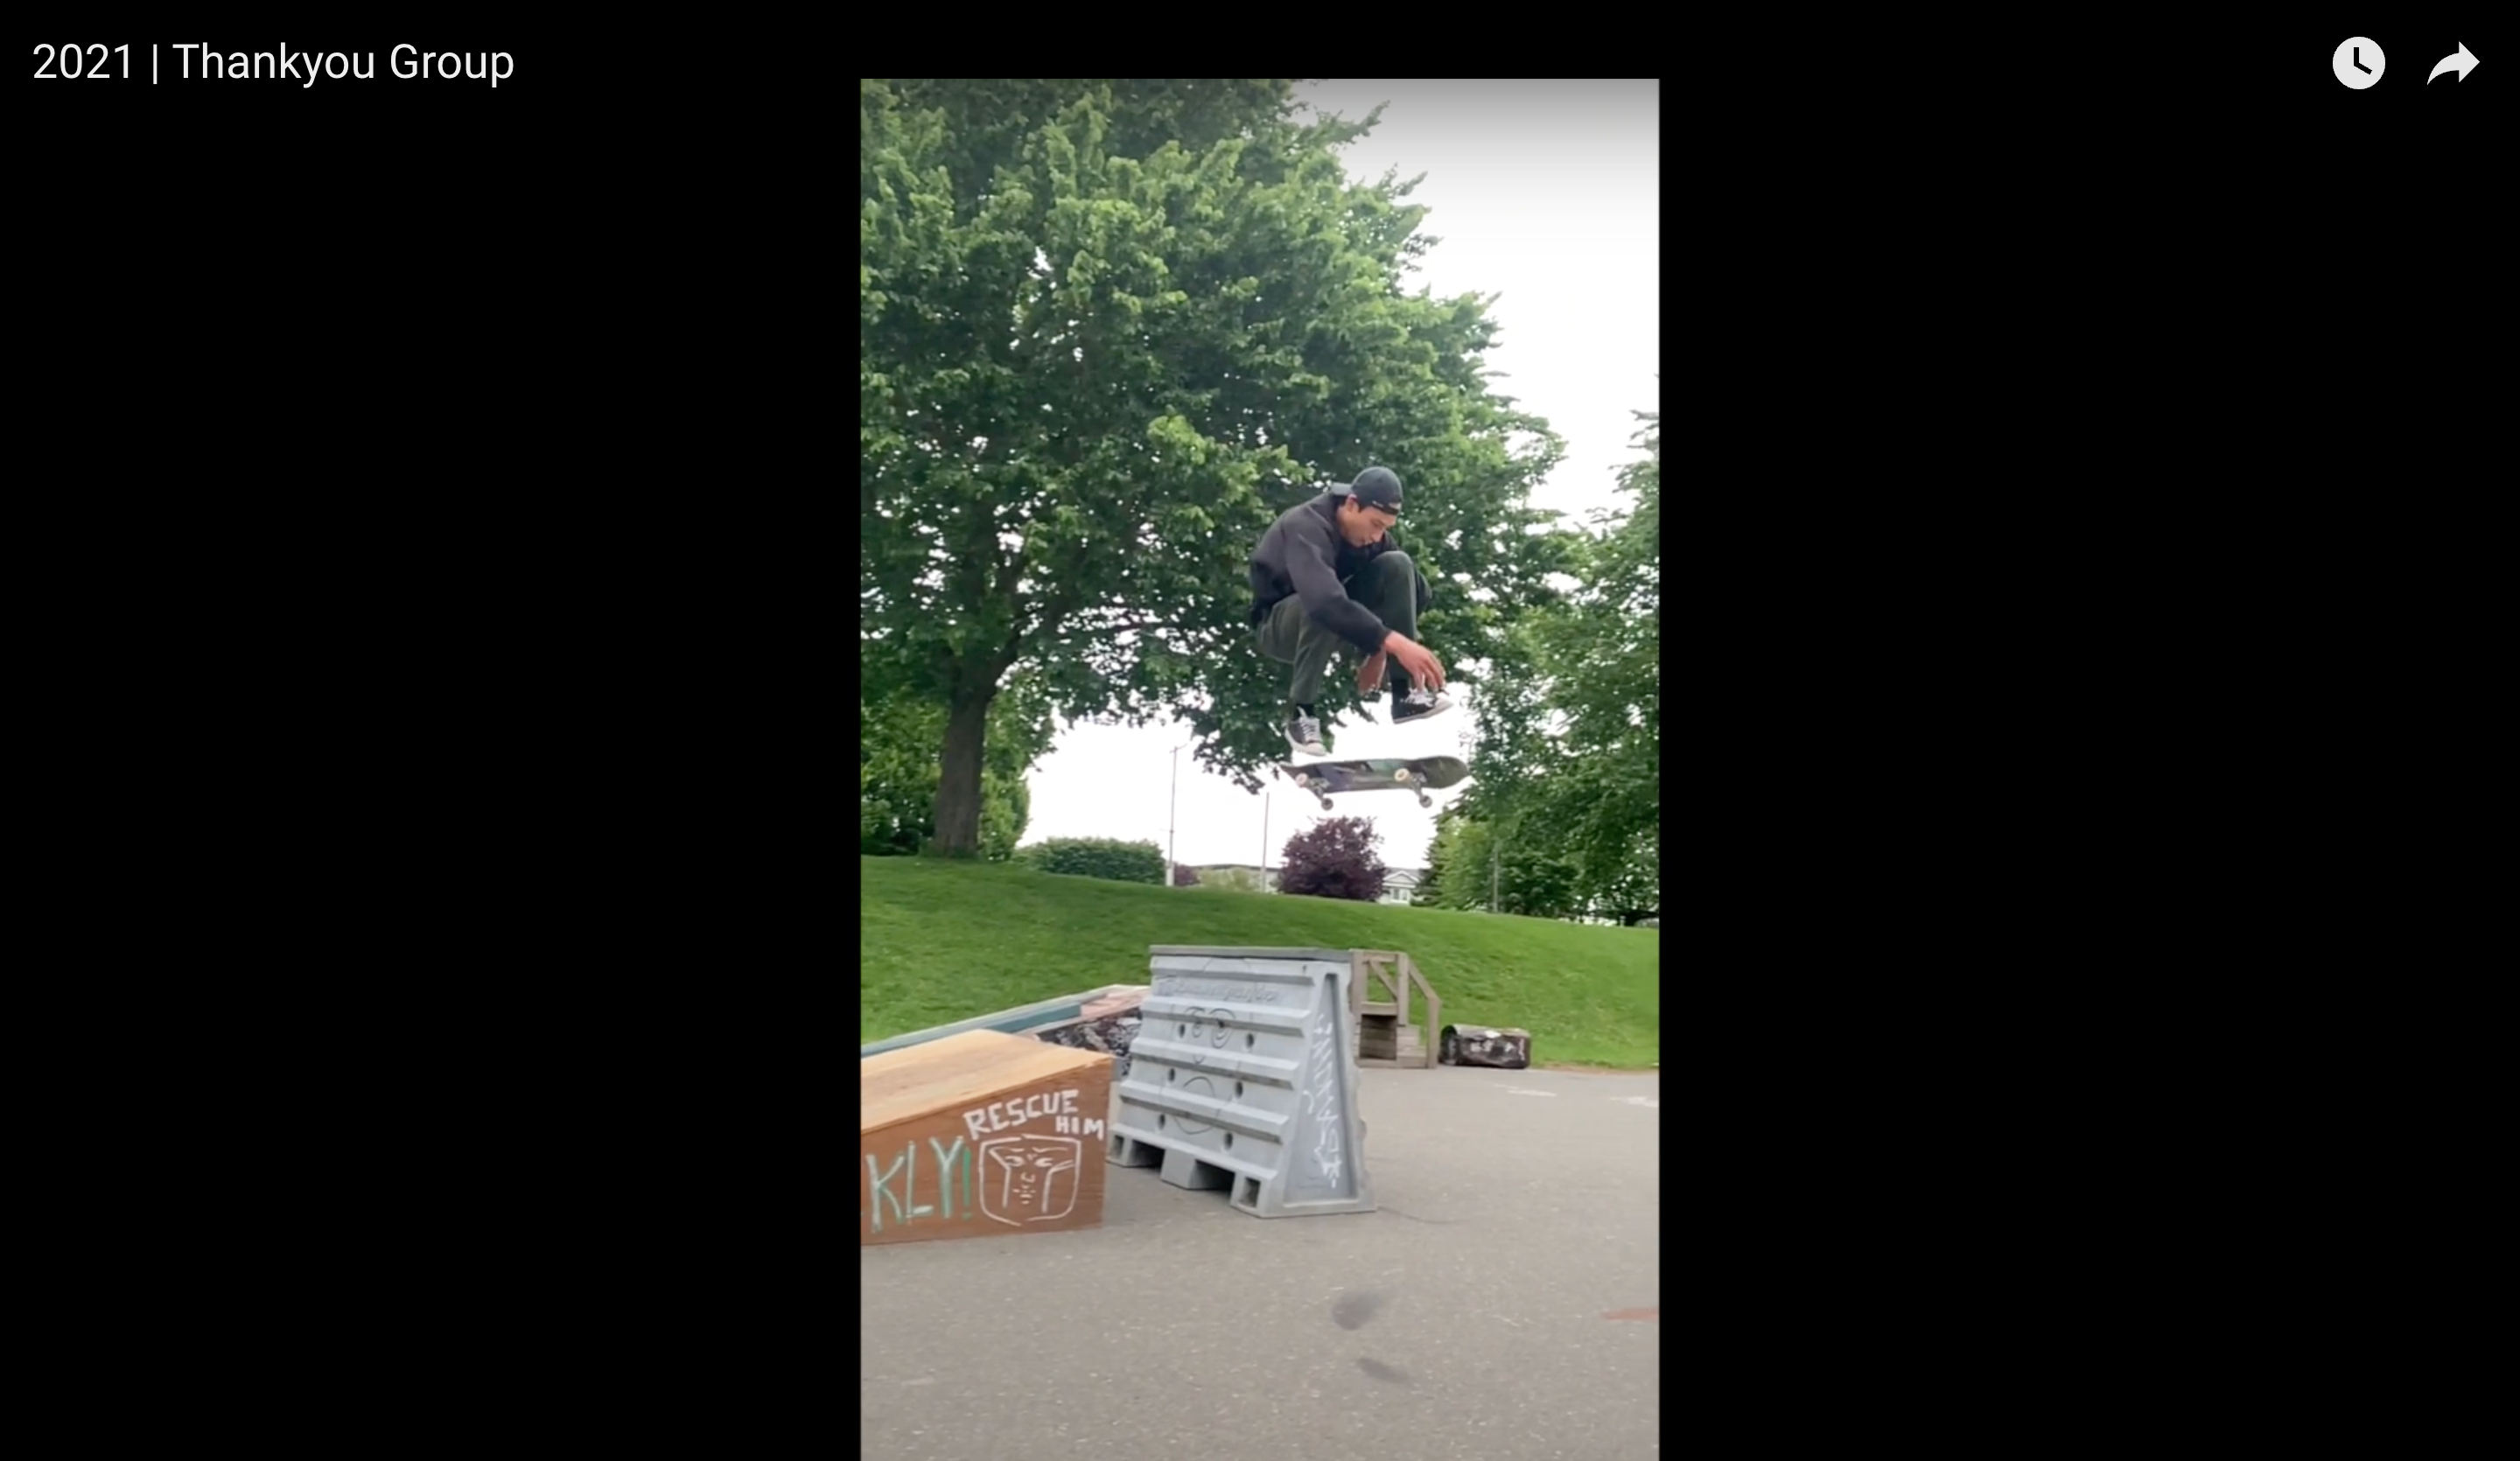 Load video: skateboarder doing a hardflip off a kicker over a metal grate.